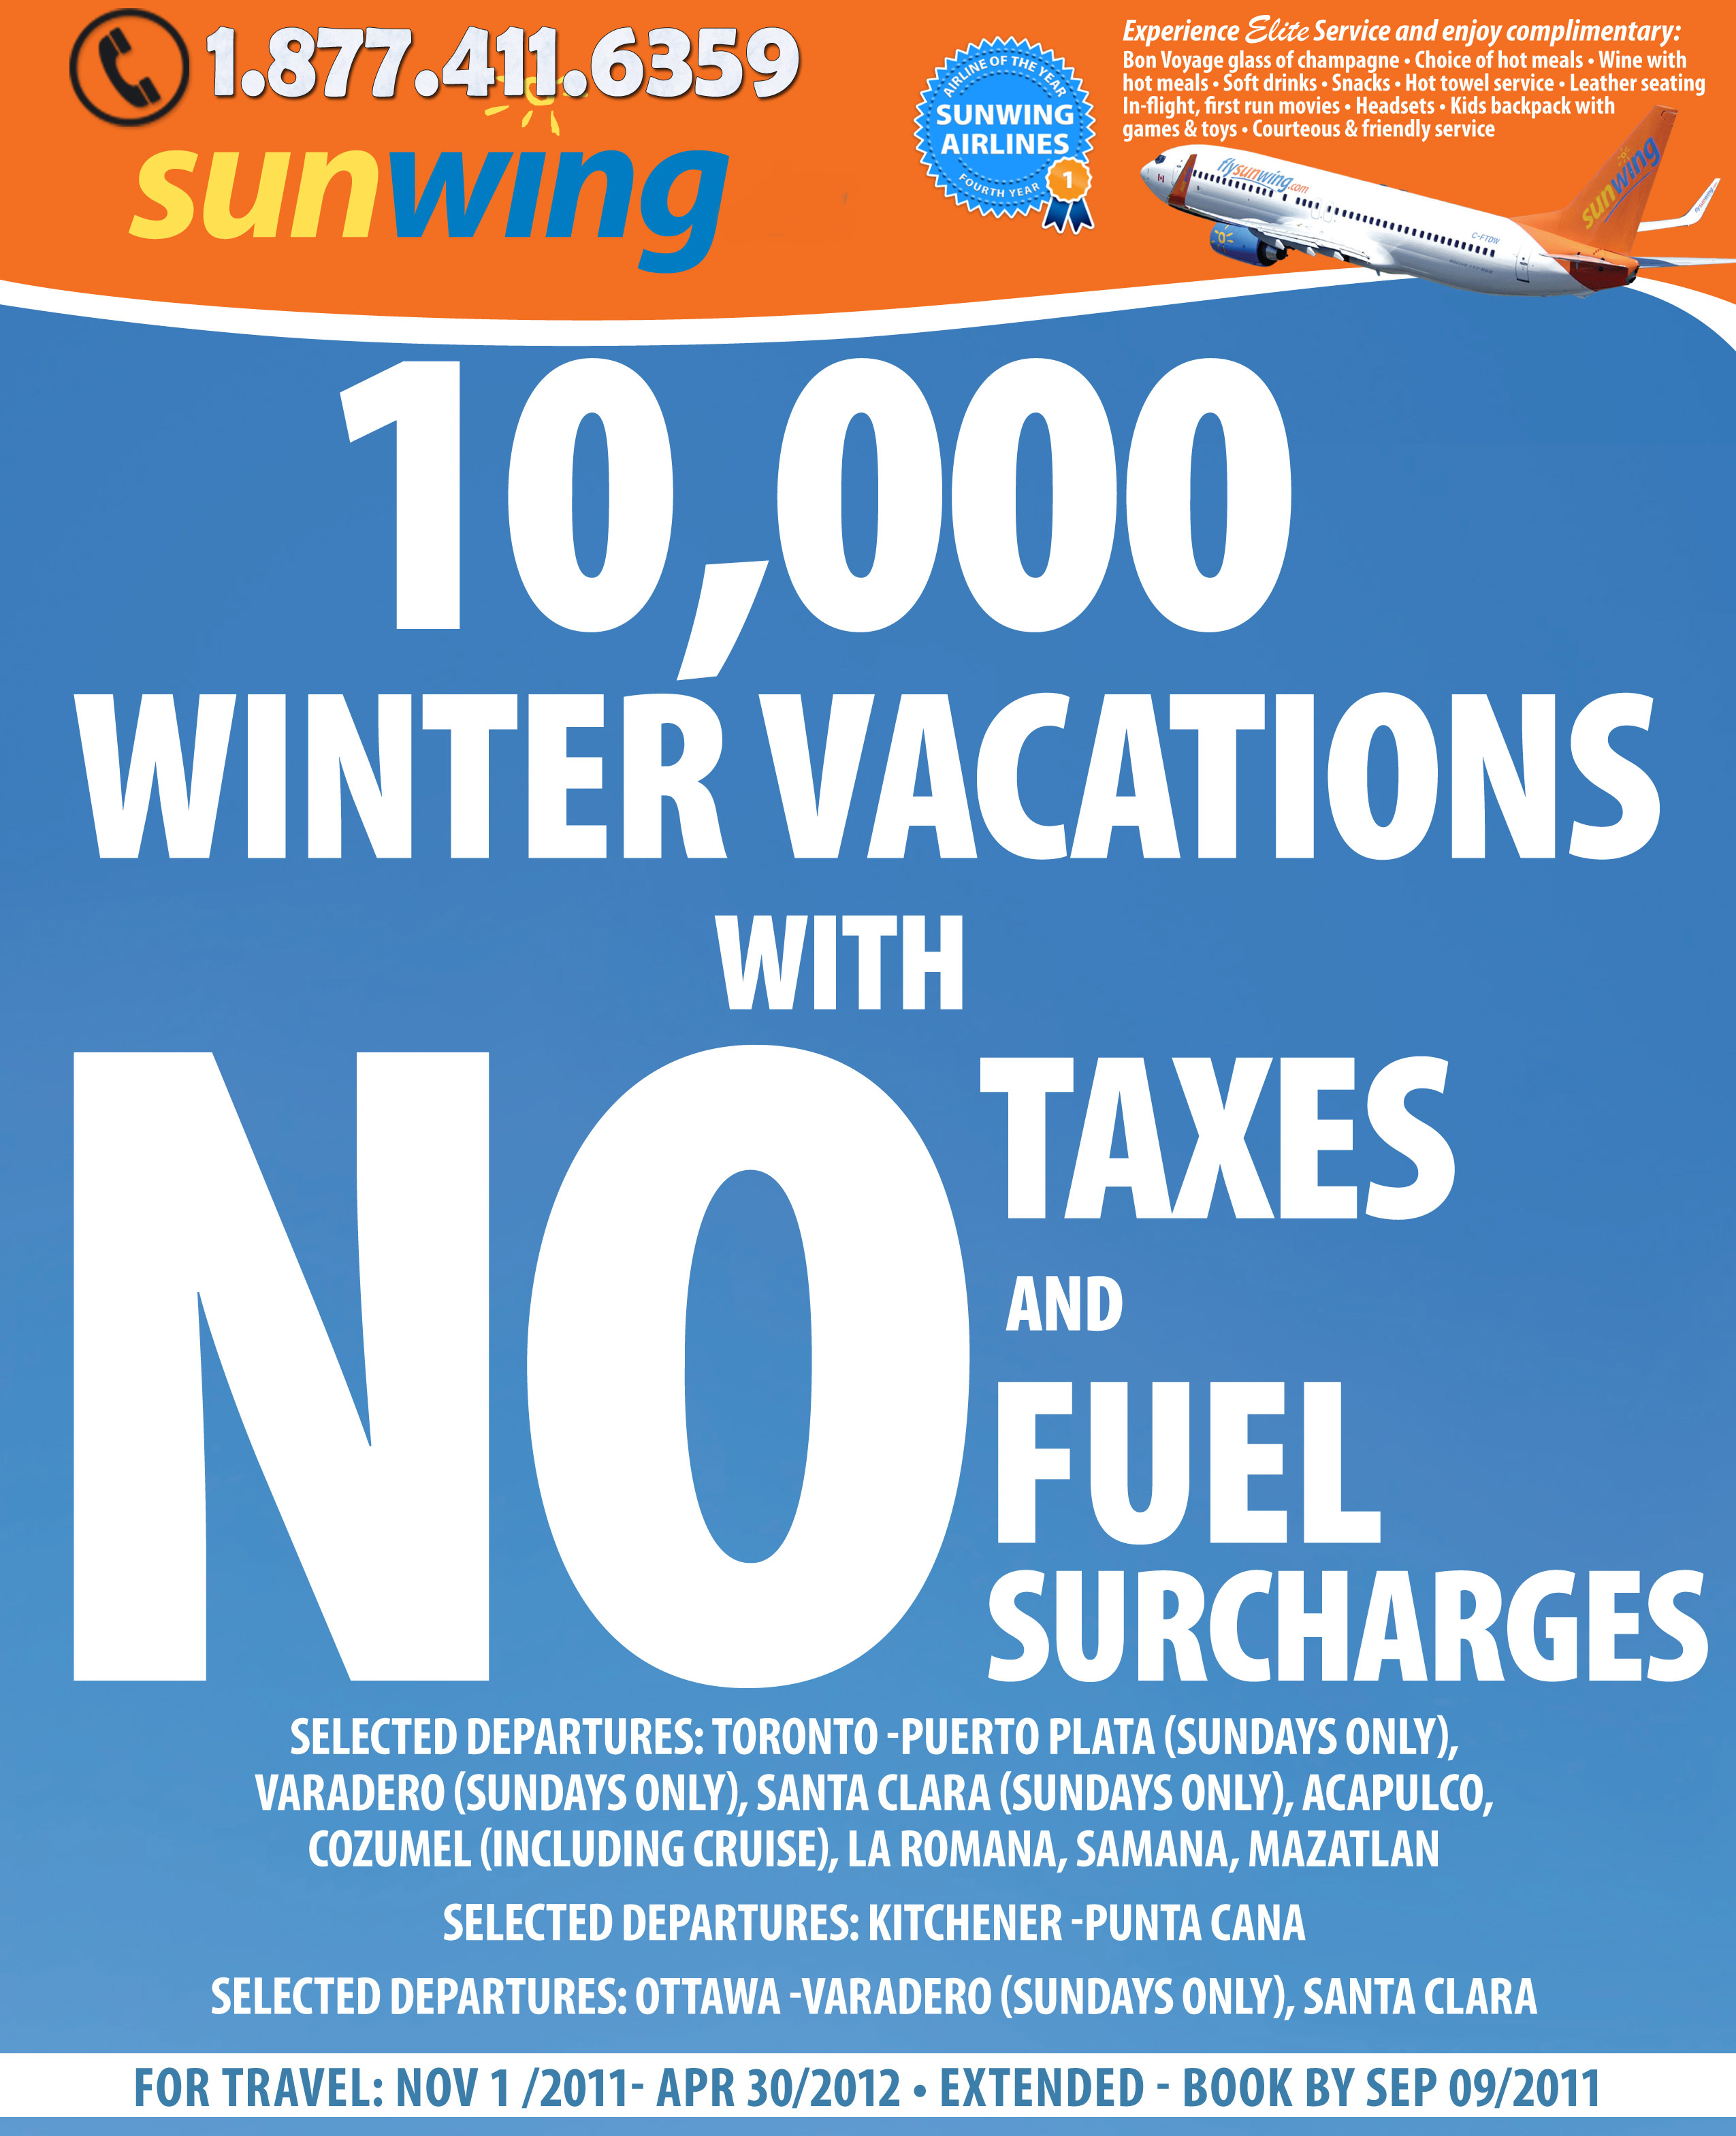 Sunwing Specials - Winter Vacation deals to Dream Destinations